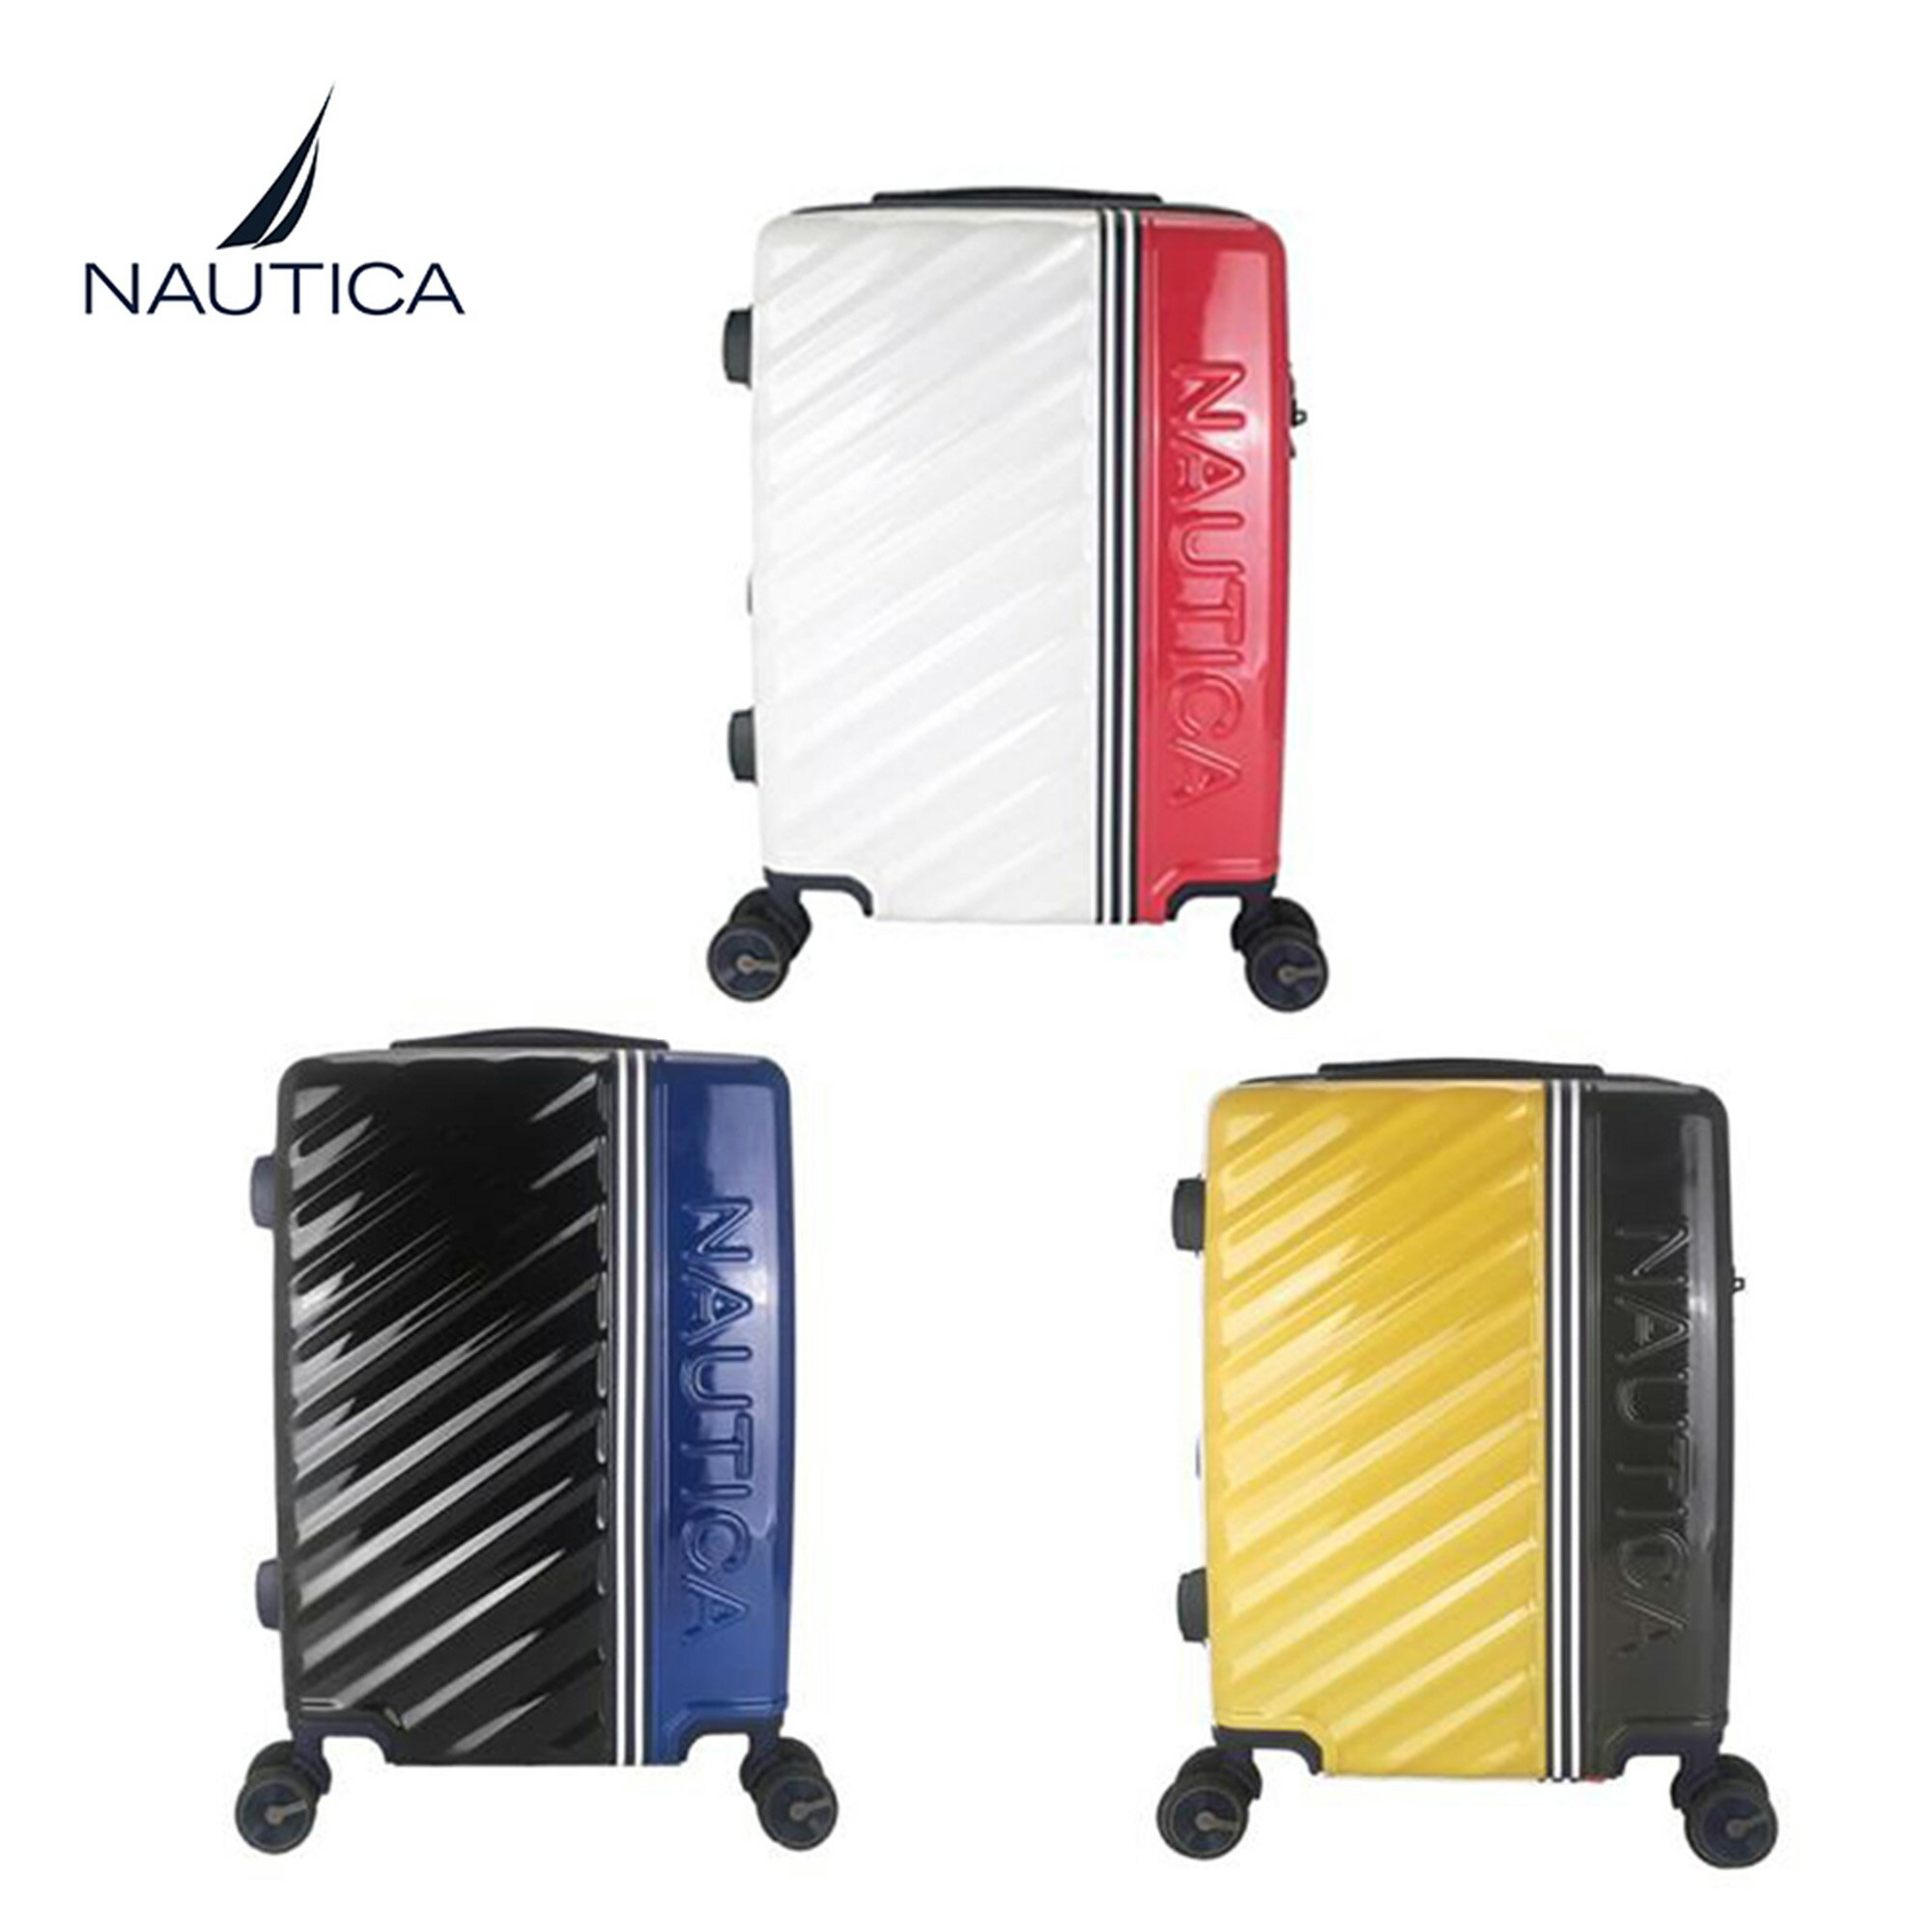 【NAUTICA】 超值組24吋跳色經典防摔行李箱 | 旅行度假 | 出國行李箱 | 旅行箱 | 登機箱 | 航空箱 | 防摔行李箱 | 商務辦公箱